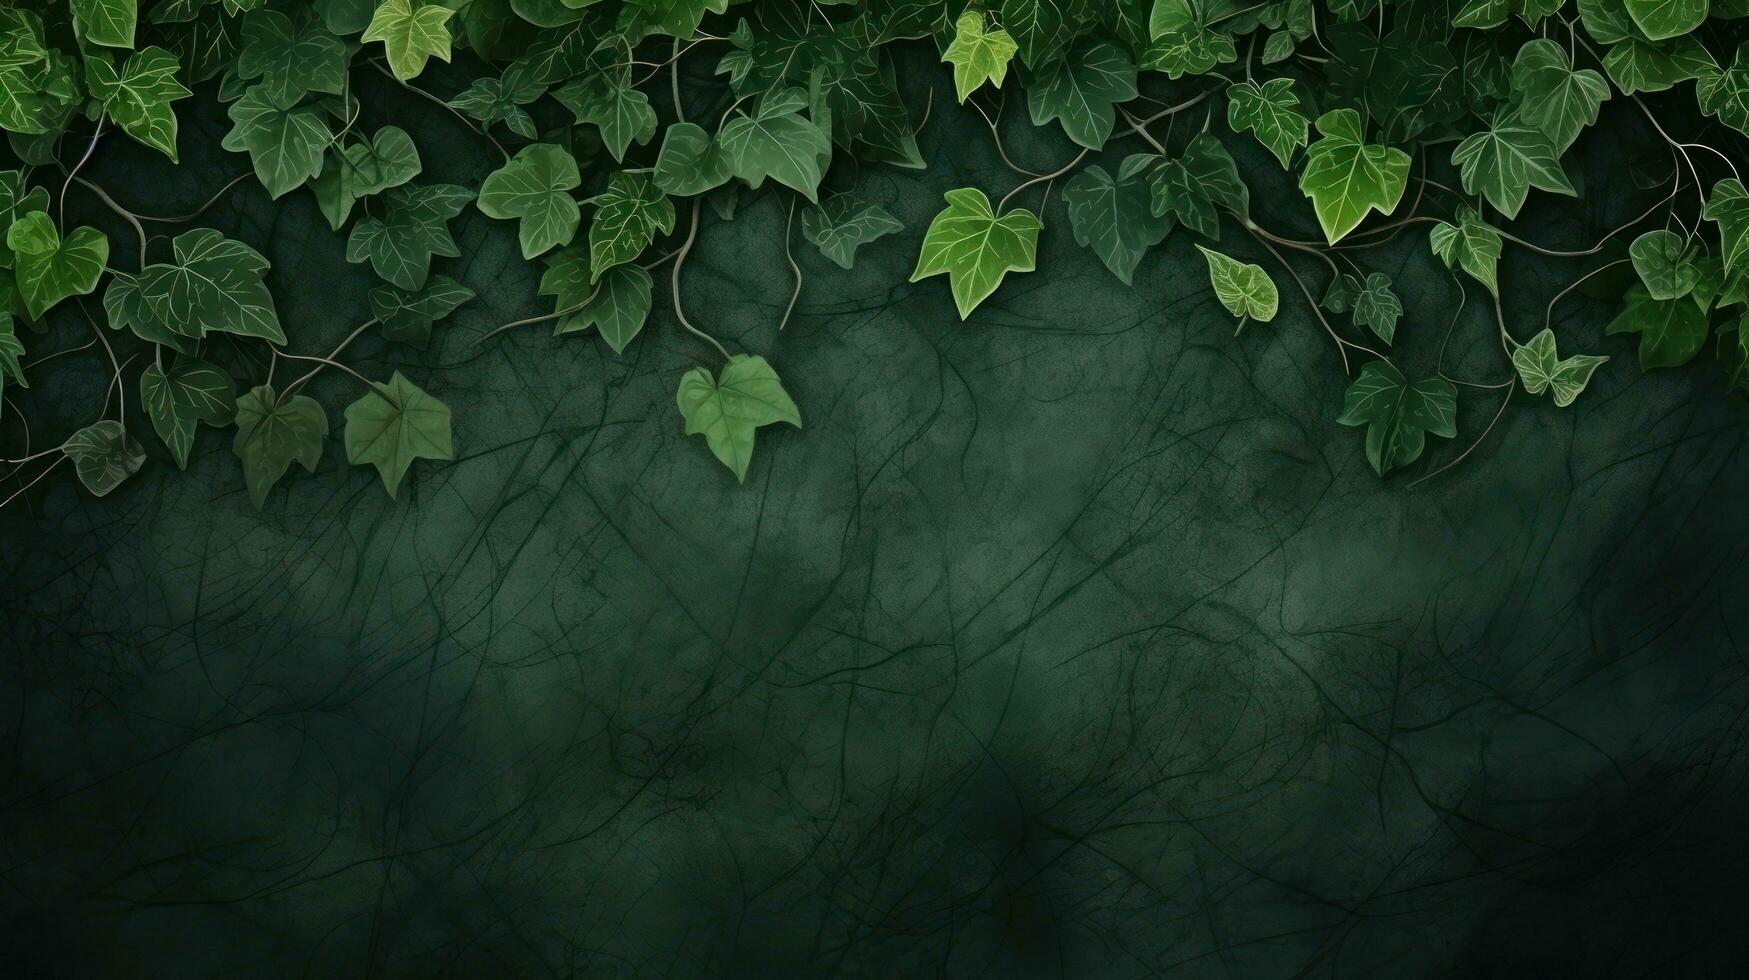 Jungle vine leaves on textured background photo